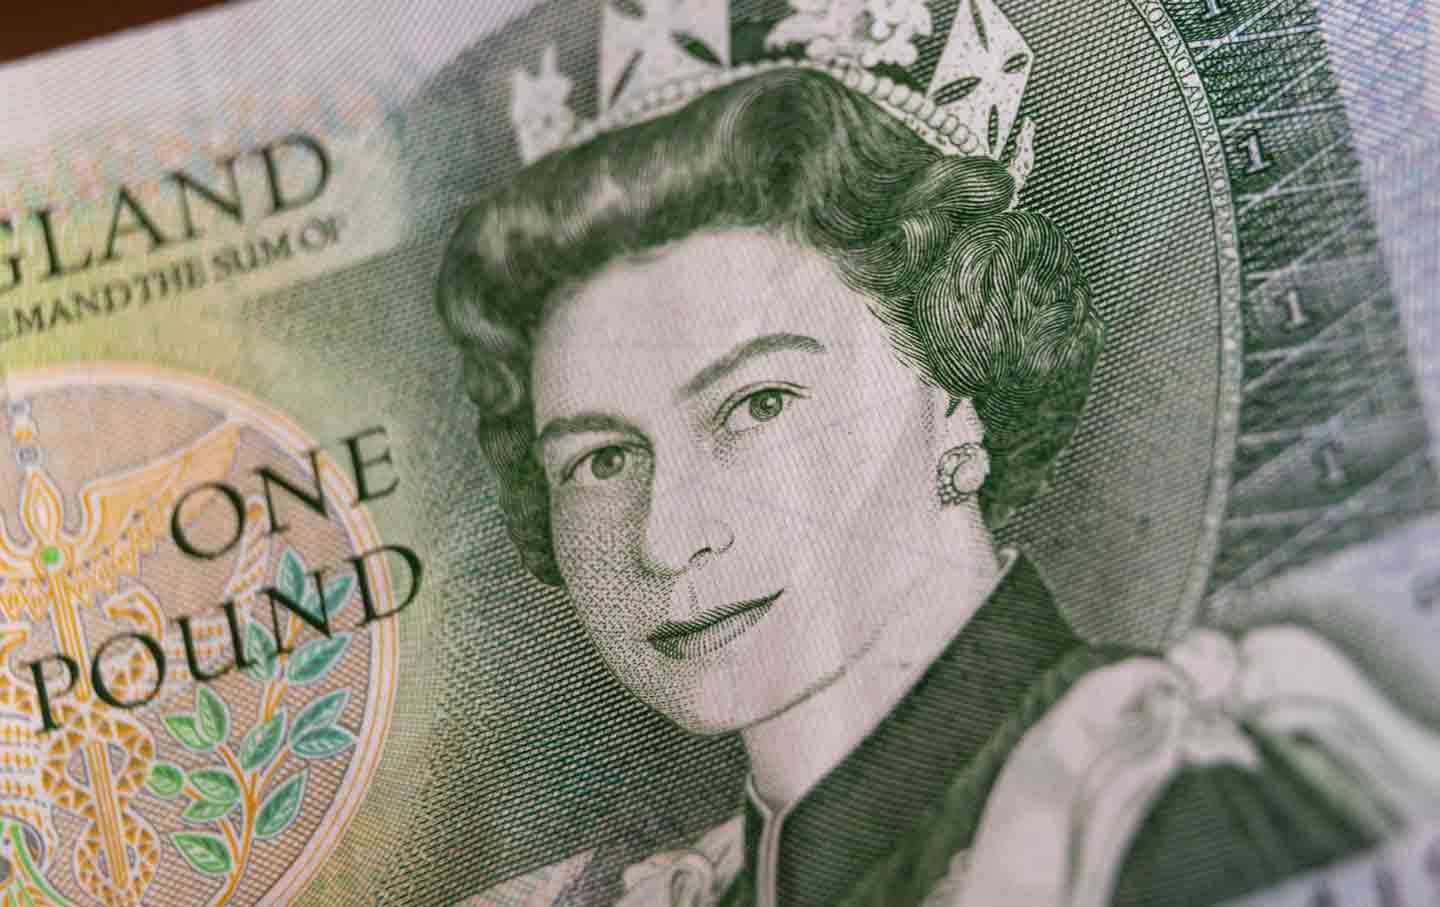 Queen Elizabeth on a one-pound note